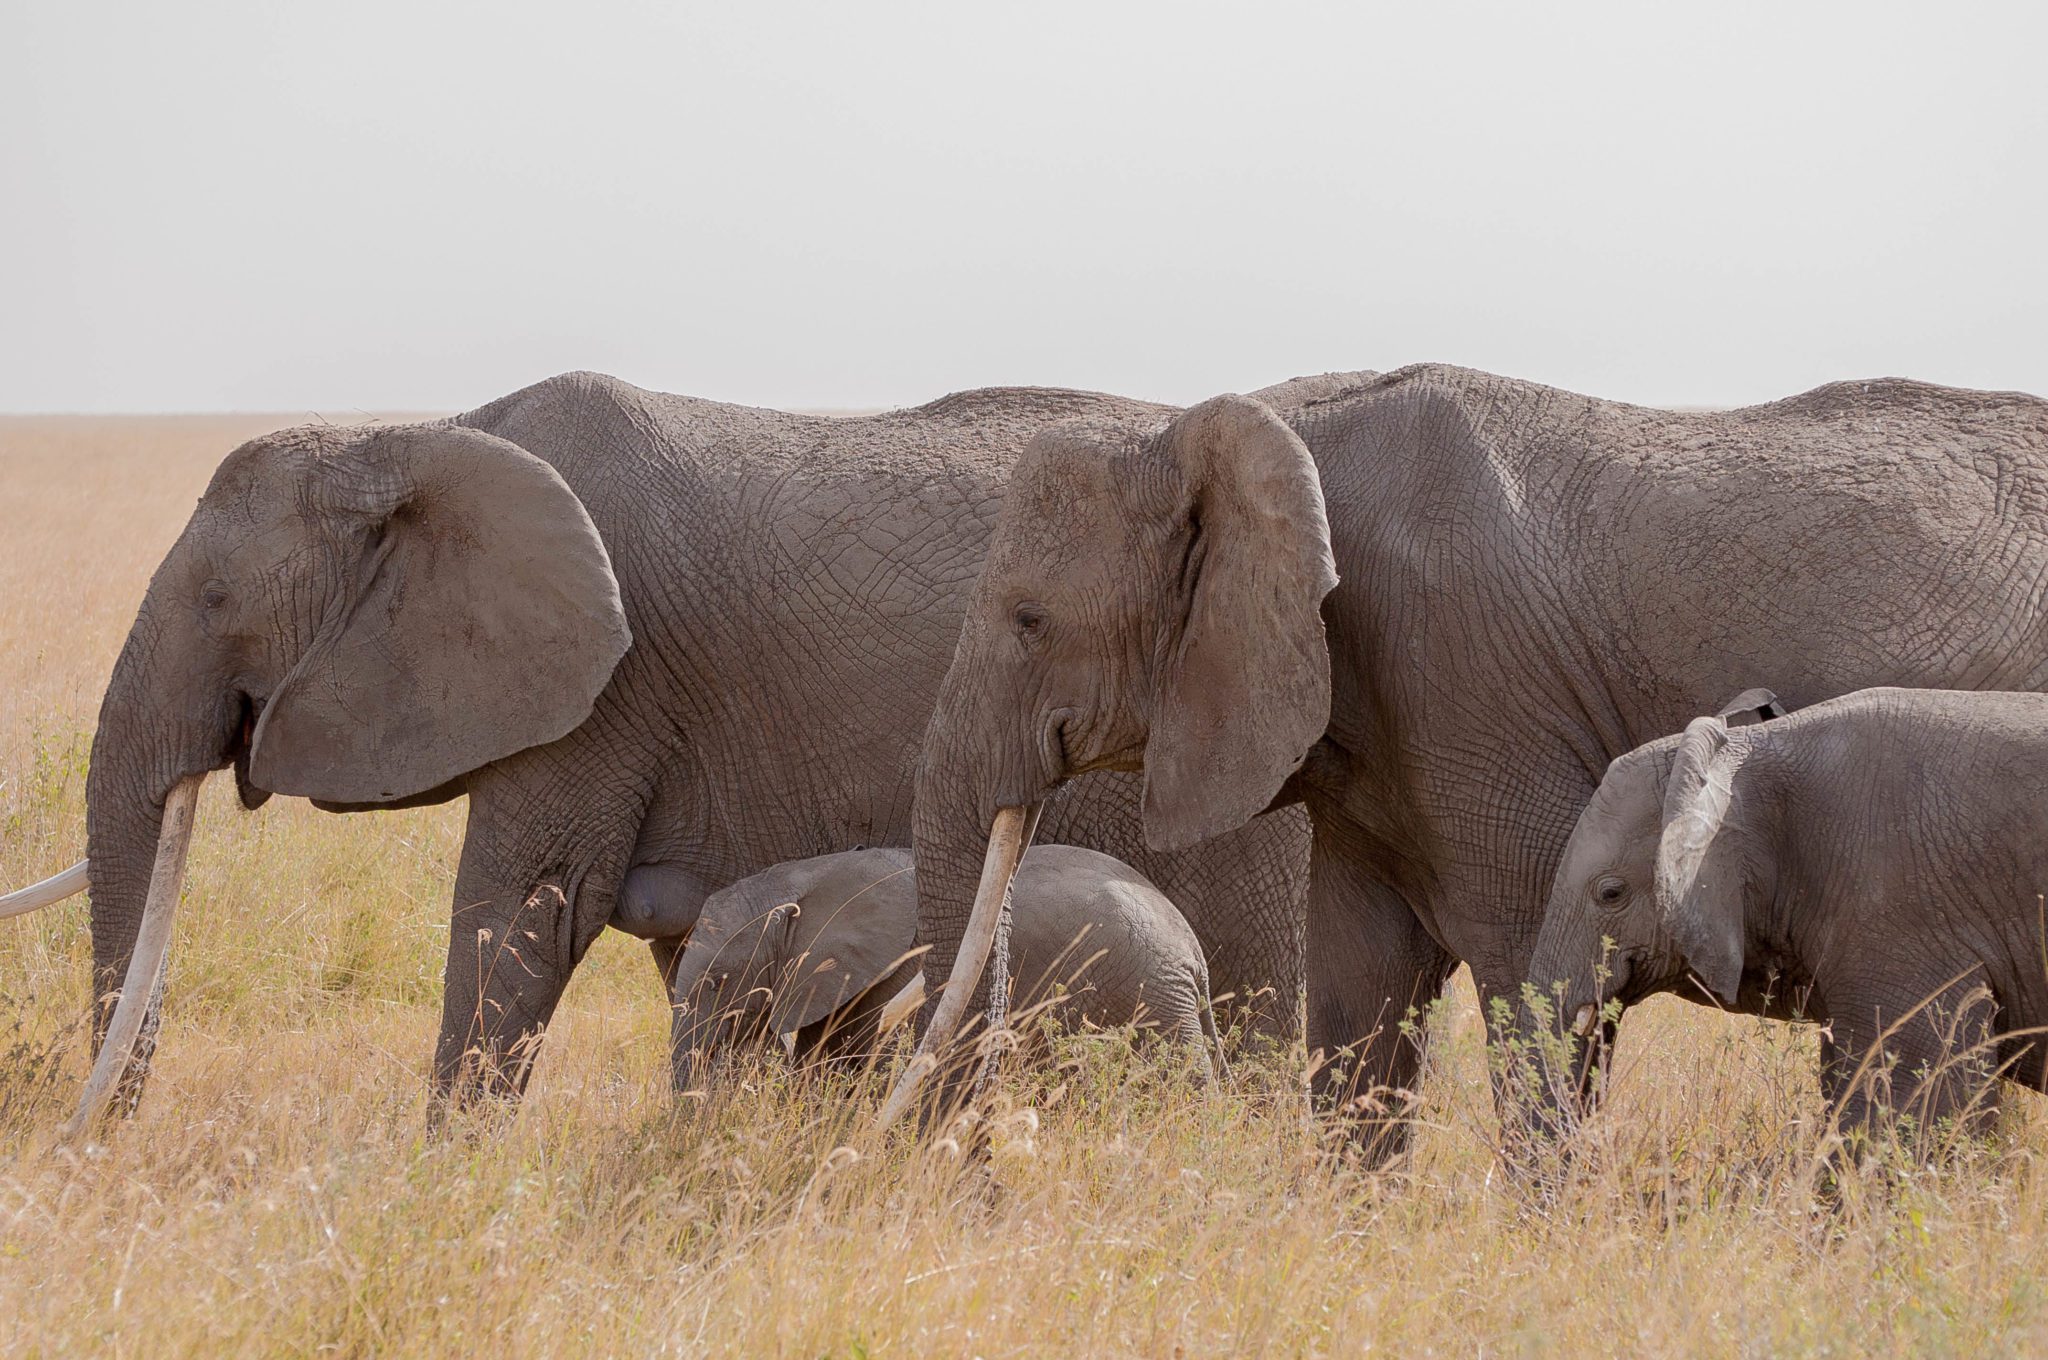 Tanzania wildlife - elephants